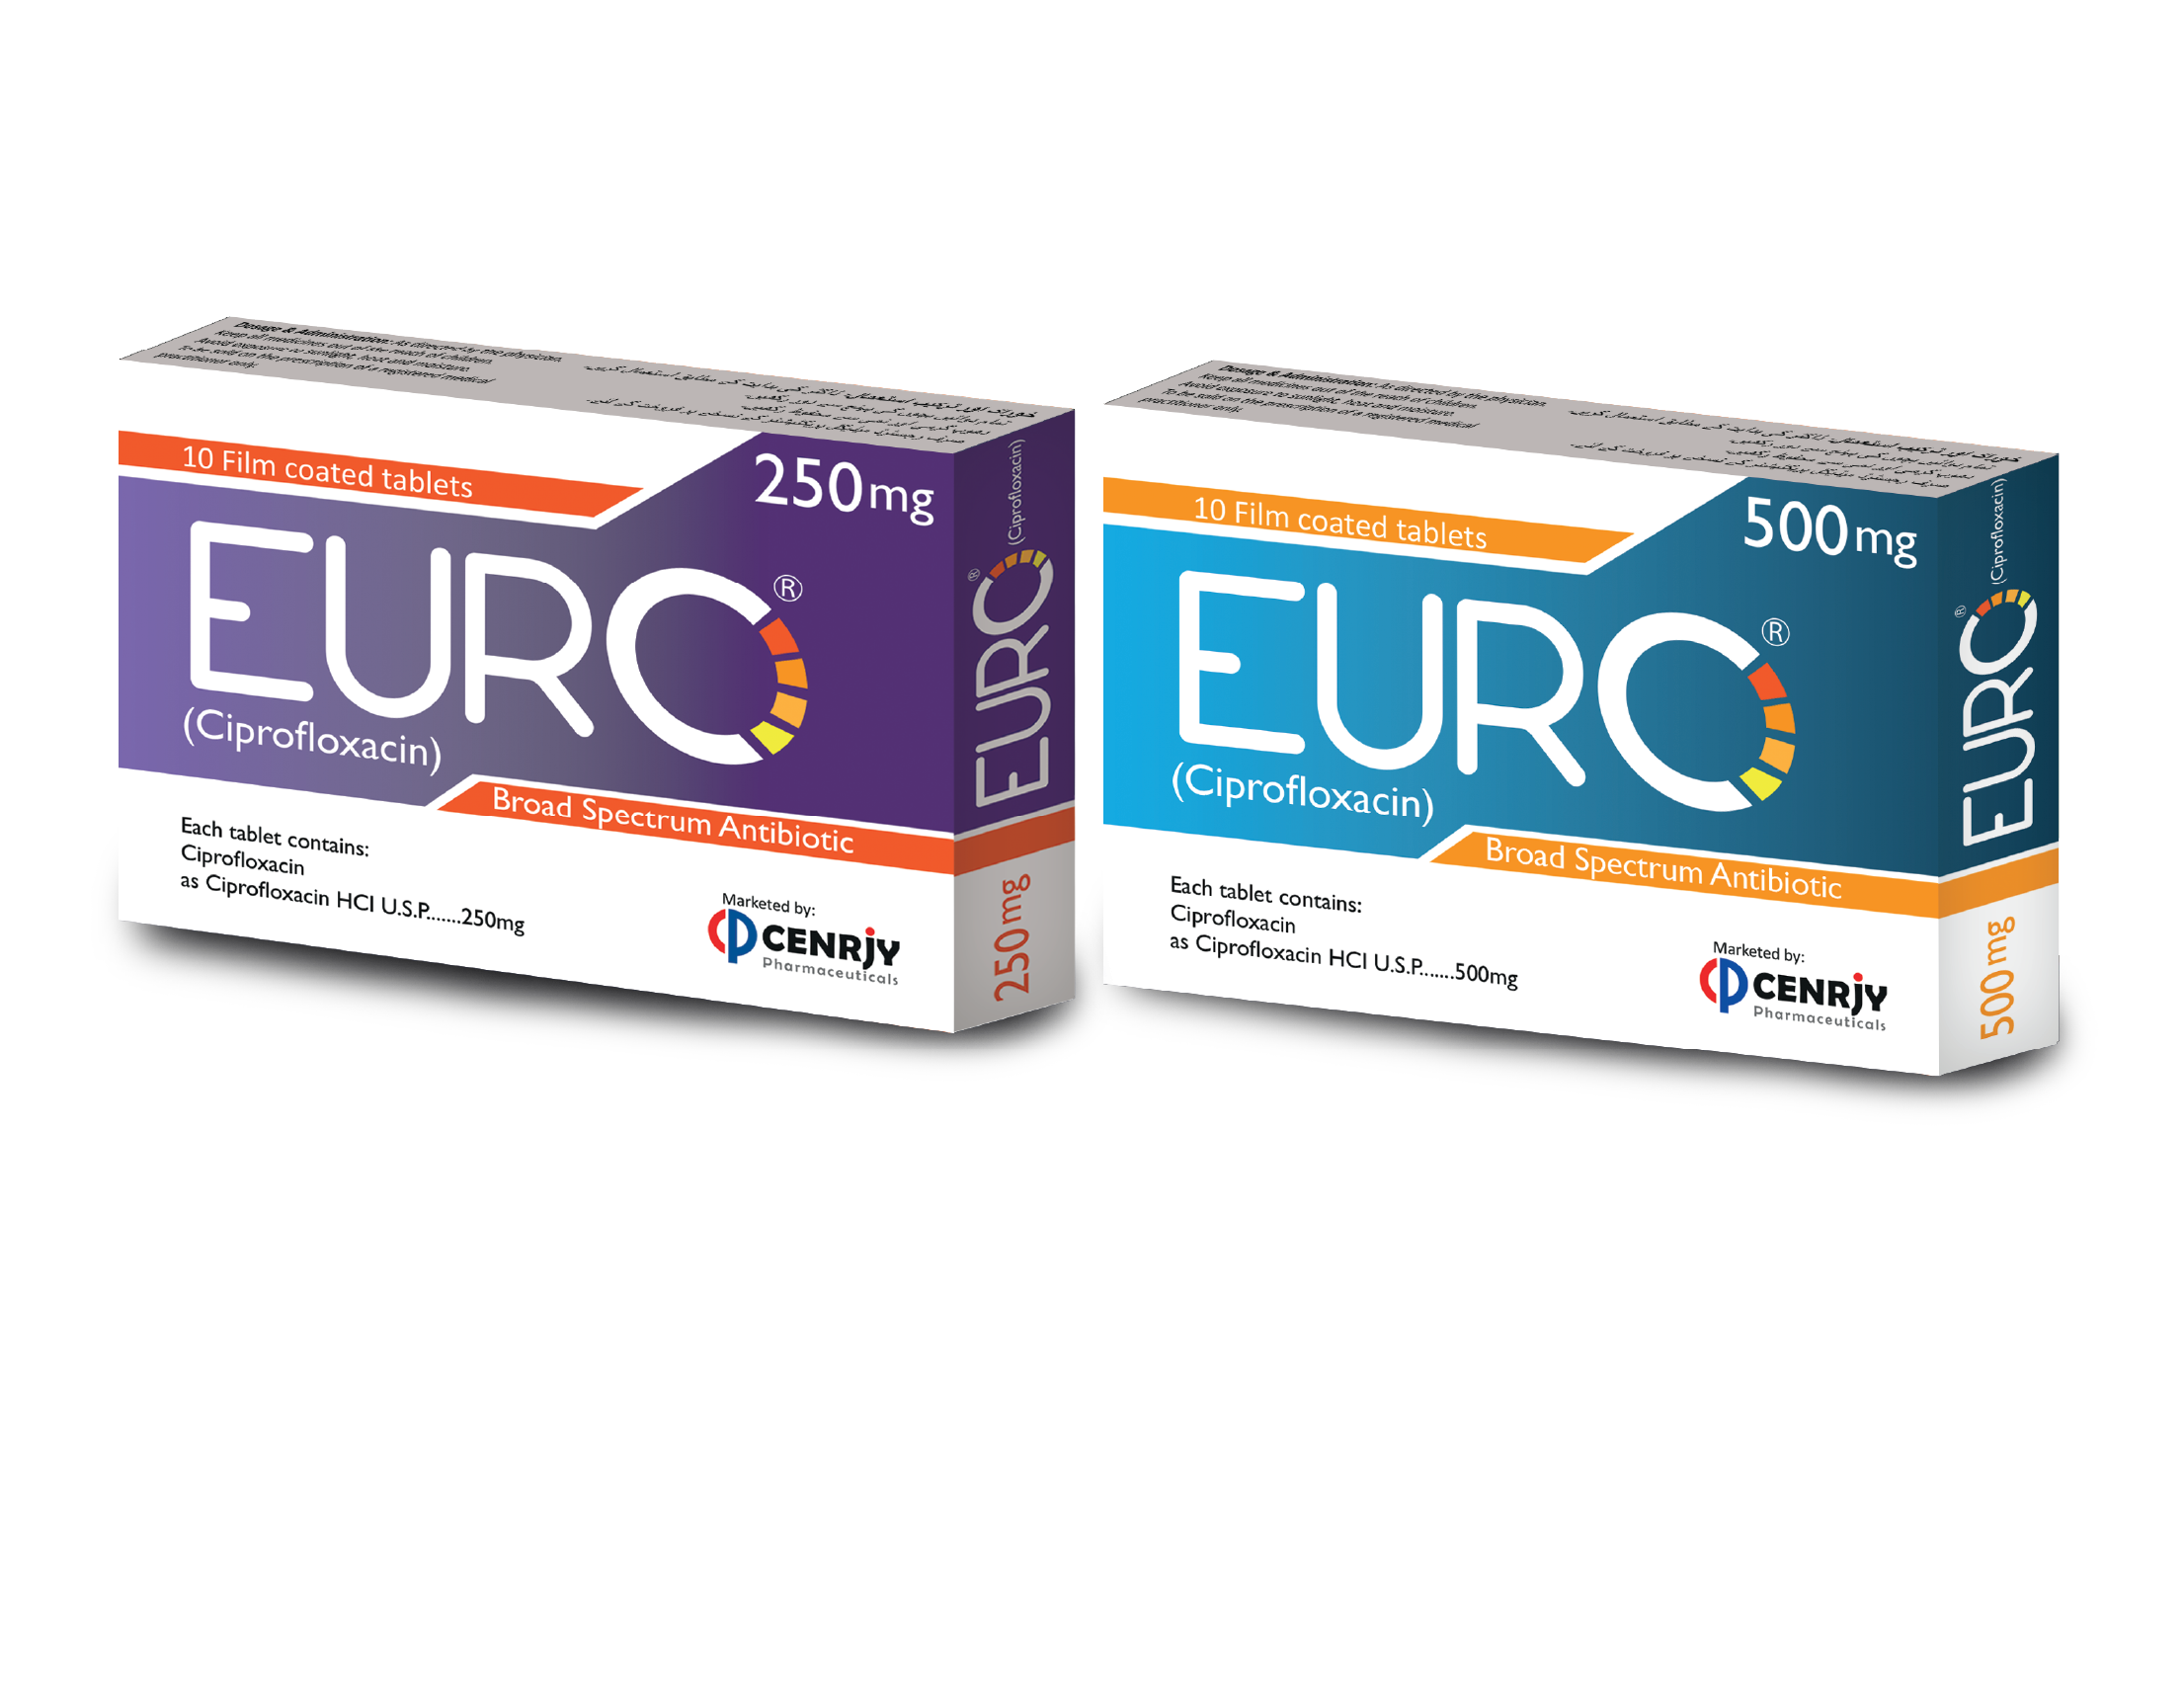 EURO (Ciprofloxacin) Tablets | CENRJY PHARMACEUTICALS